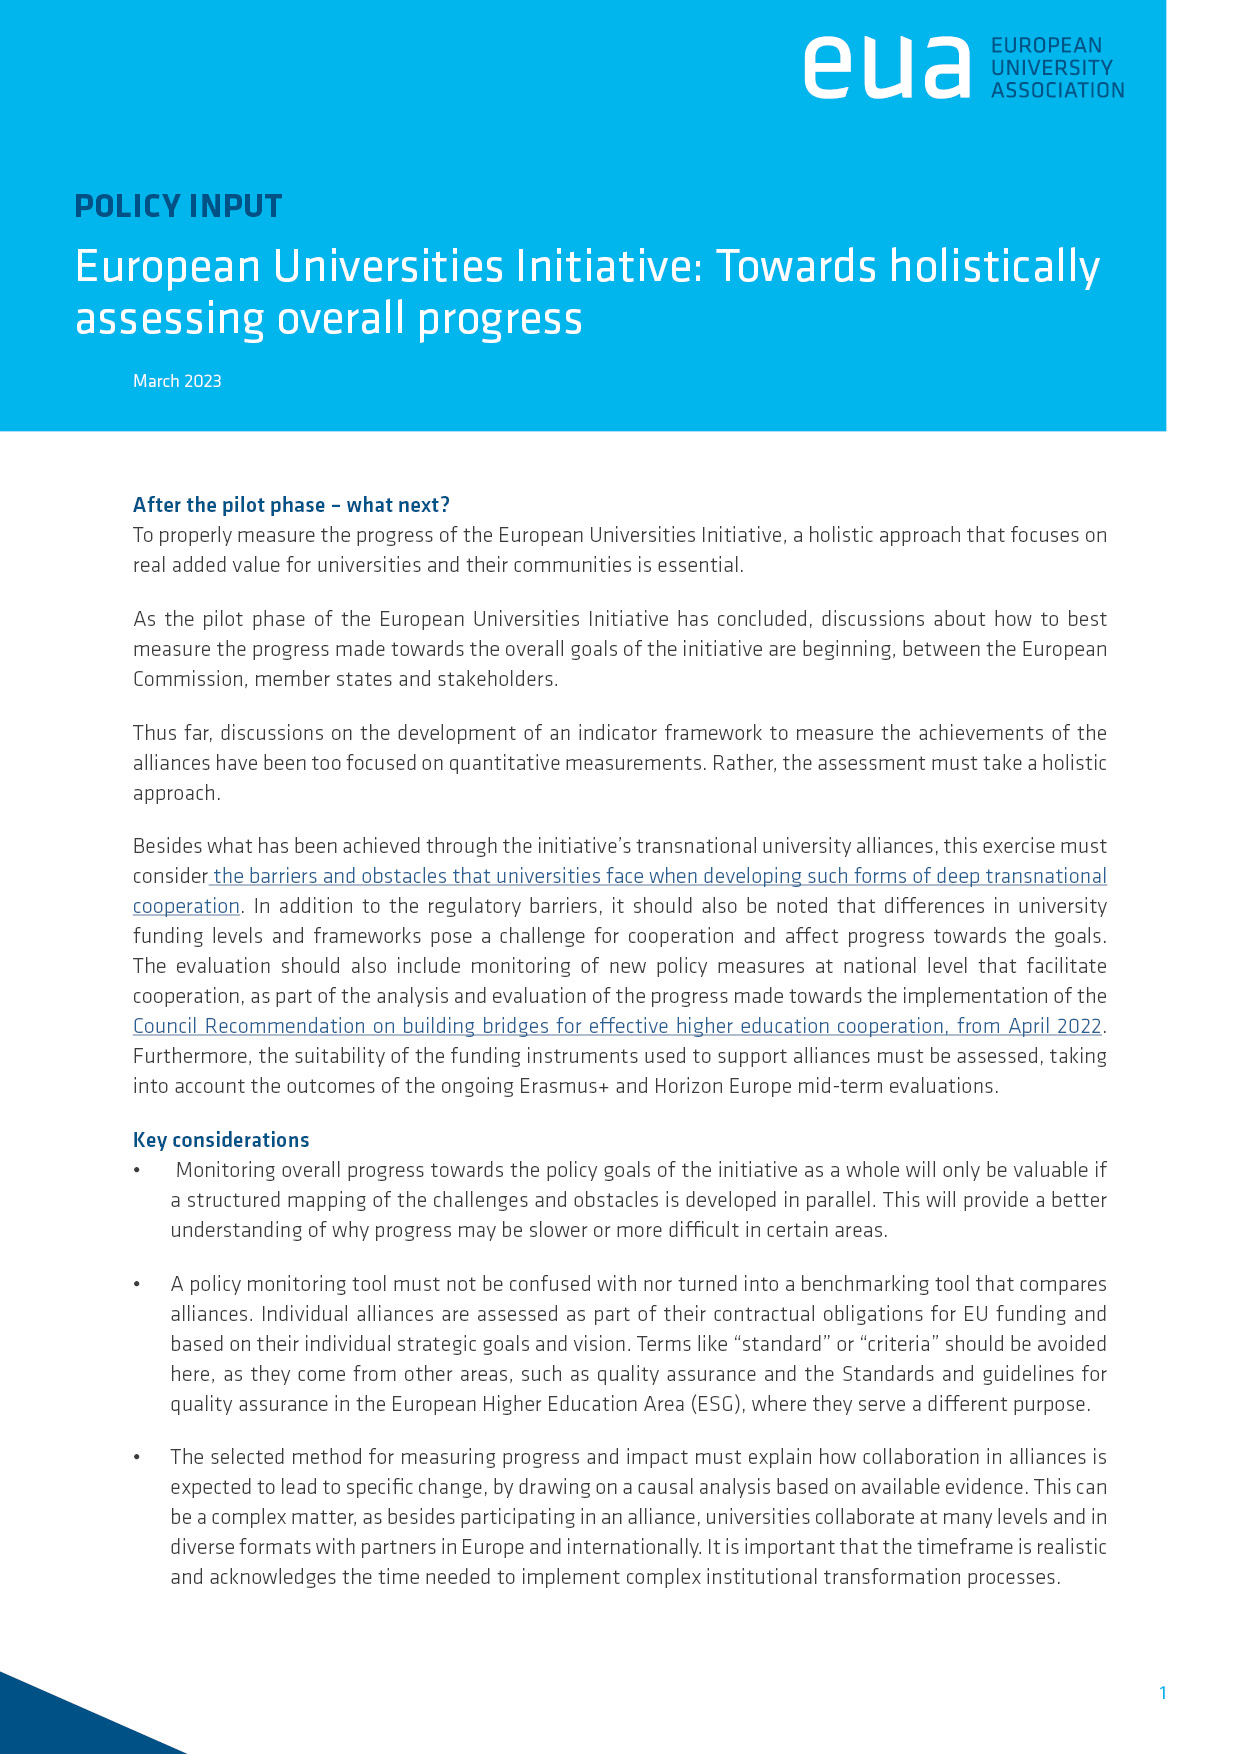 European Universities Initiative: Towards a holistic approach for assessing progress